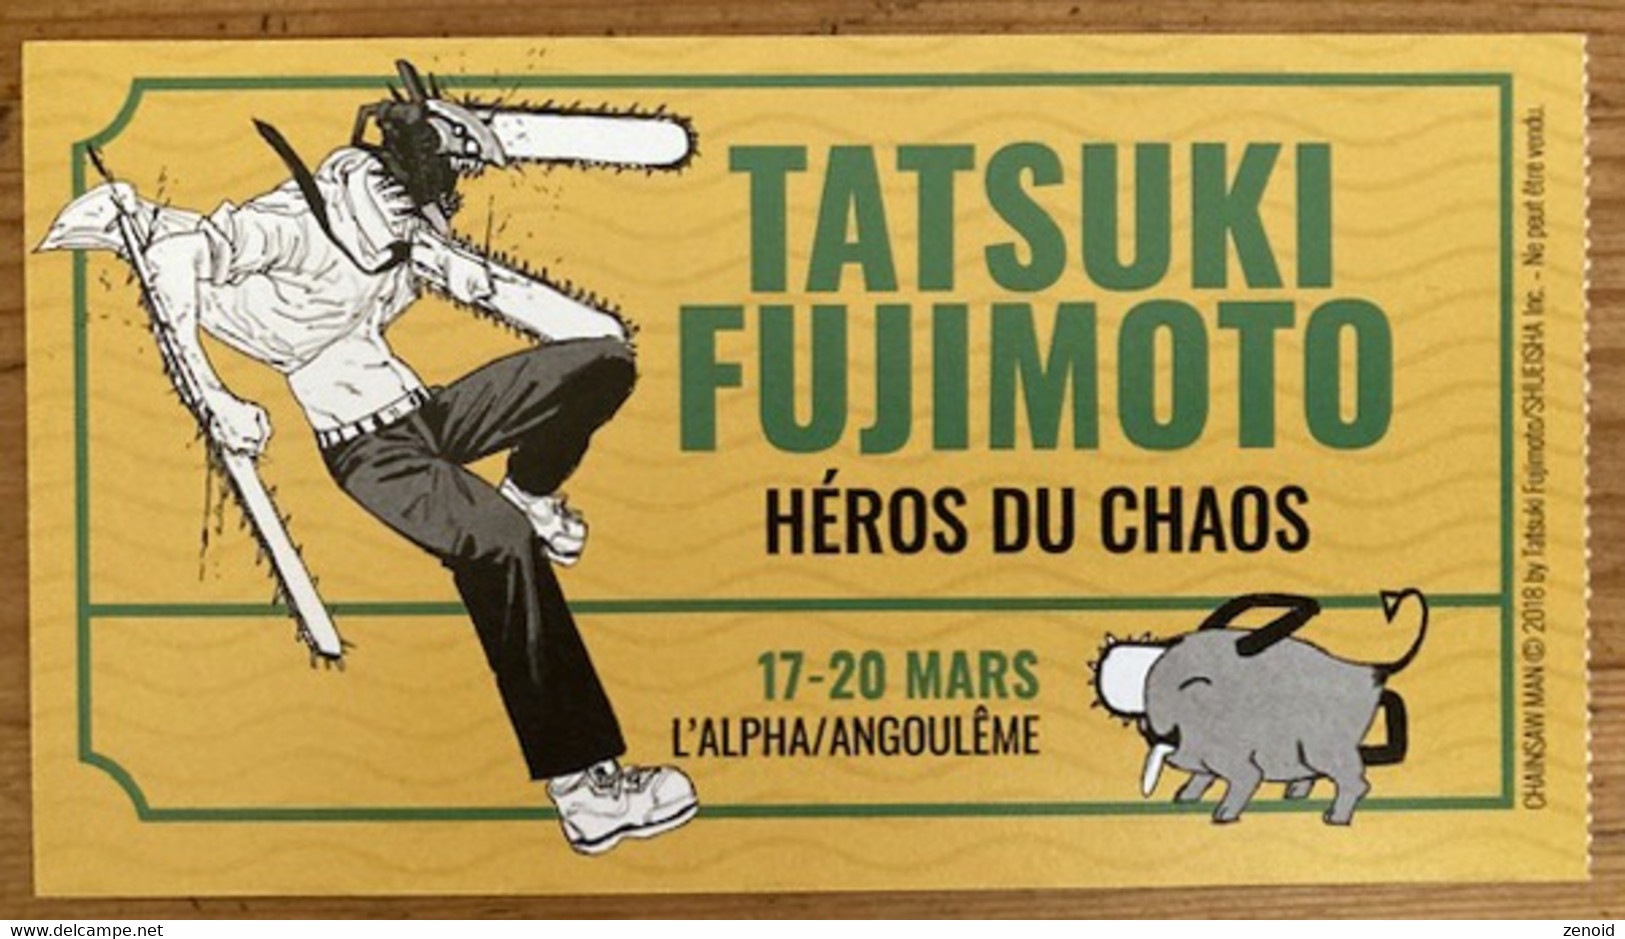 Ticket Expo "Tatsuki Fujimoto - Heros Du Chaos" - Angoulême 2022 - Other Products